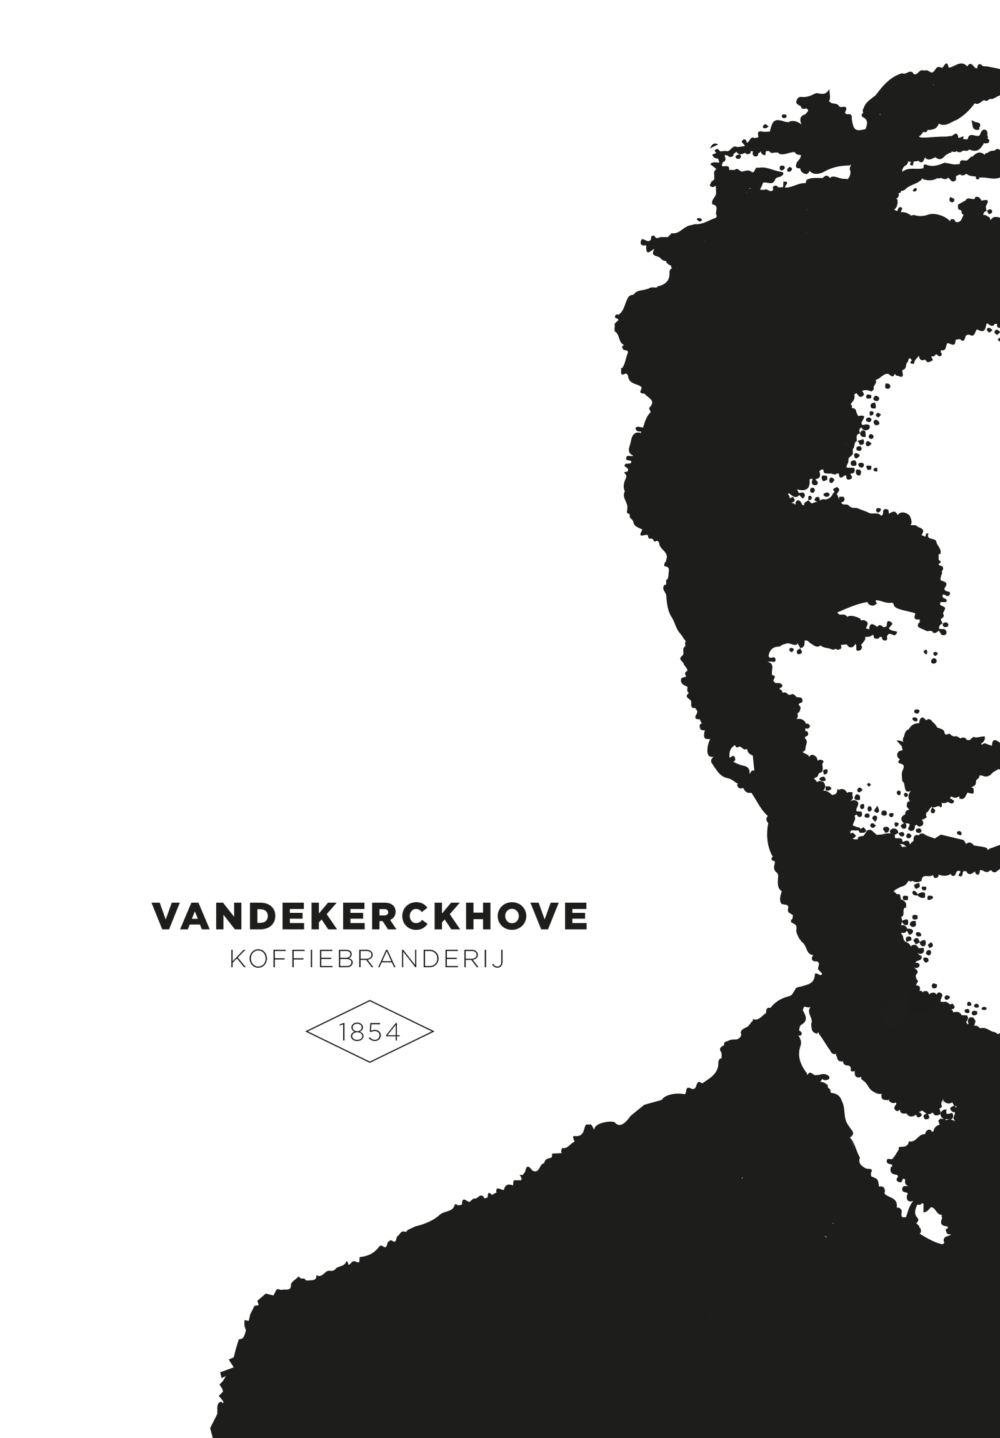 Vandekerckhove Logo